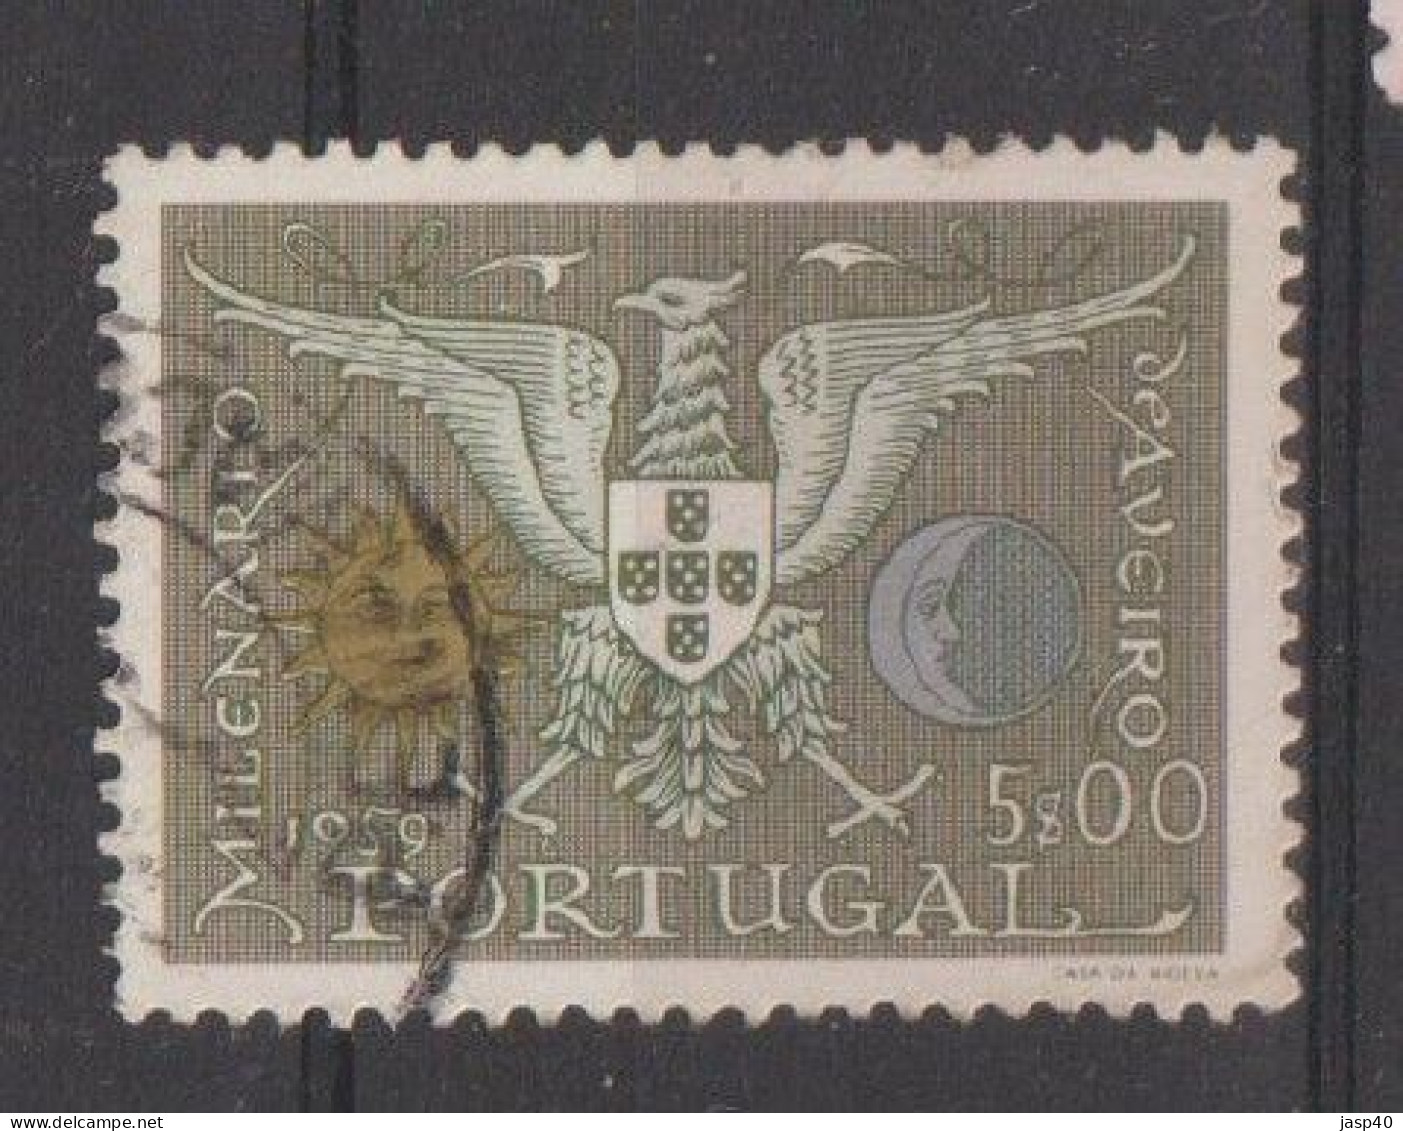 PORTUGAL 848 - POSTMARKS OF PORTUGAL - PENAMACOR - Usado